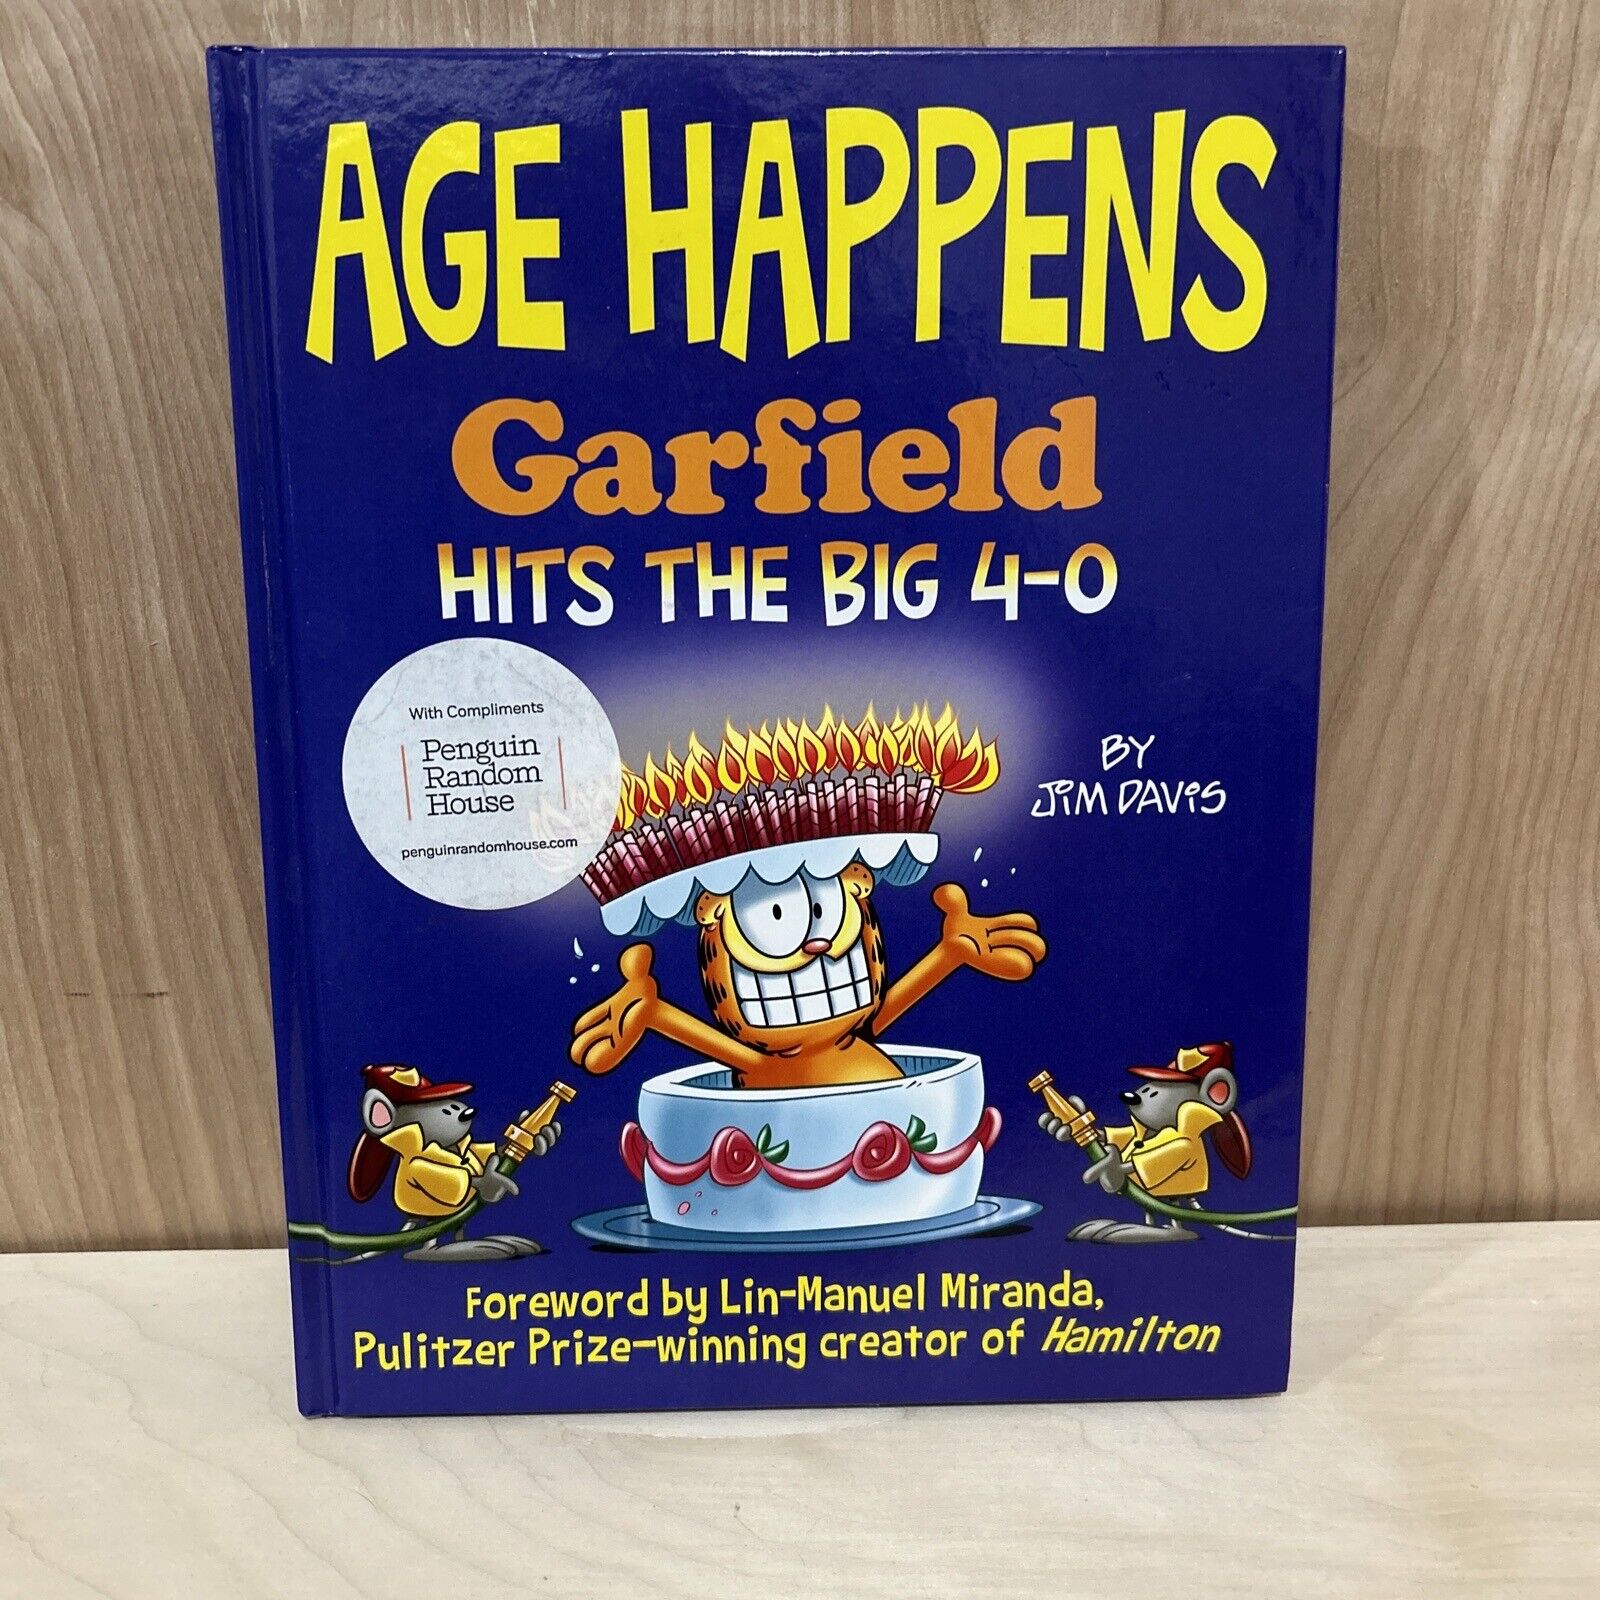 Age Happens: Garfield Hits the Big 4-0 by Jim Davis (Hardcover)